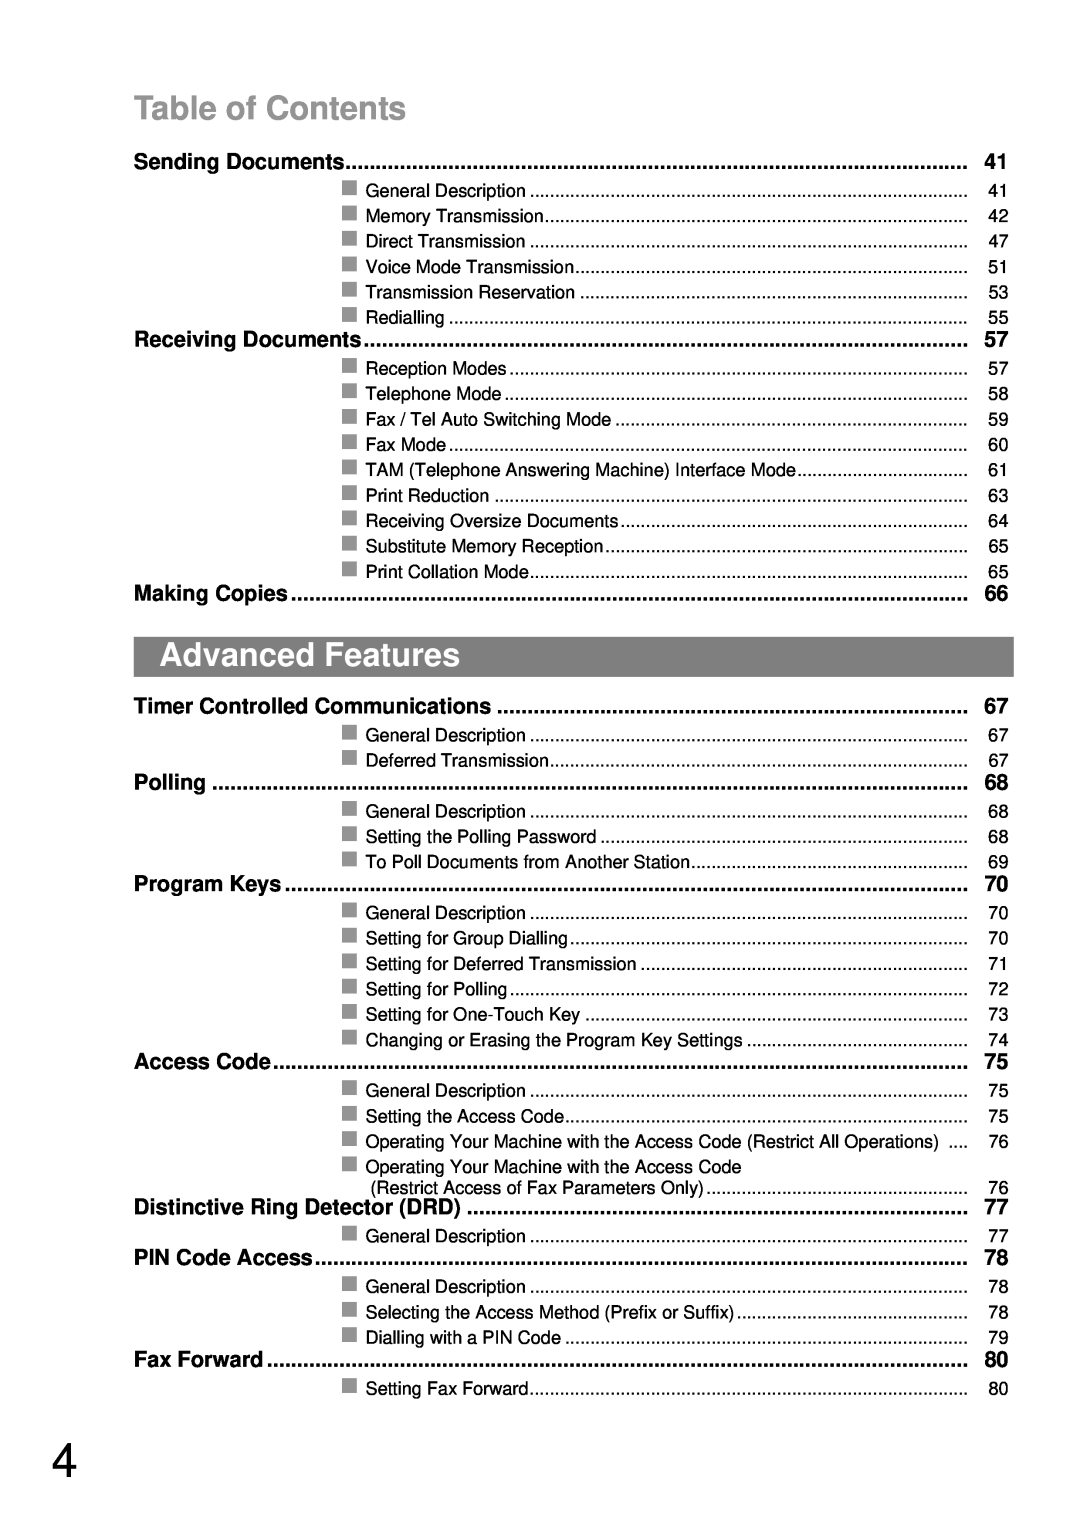 Castelle UF-490 appendix Advanced Features, Table of Contents 